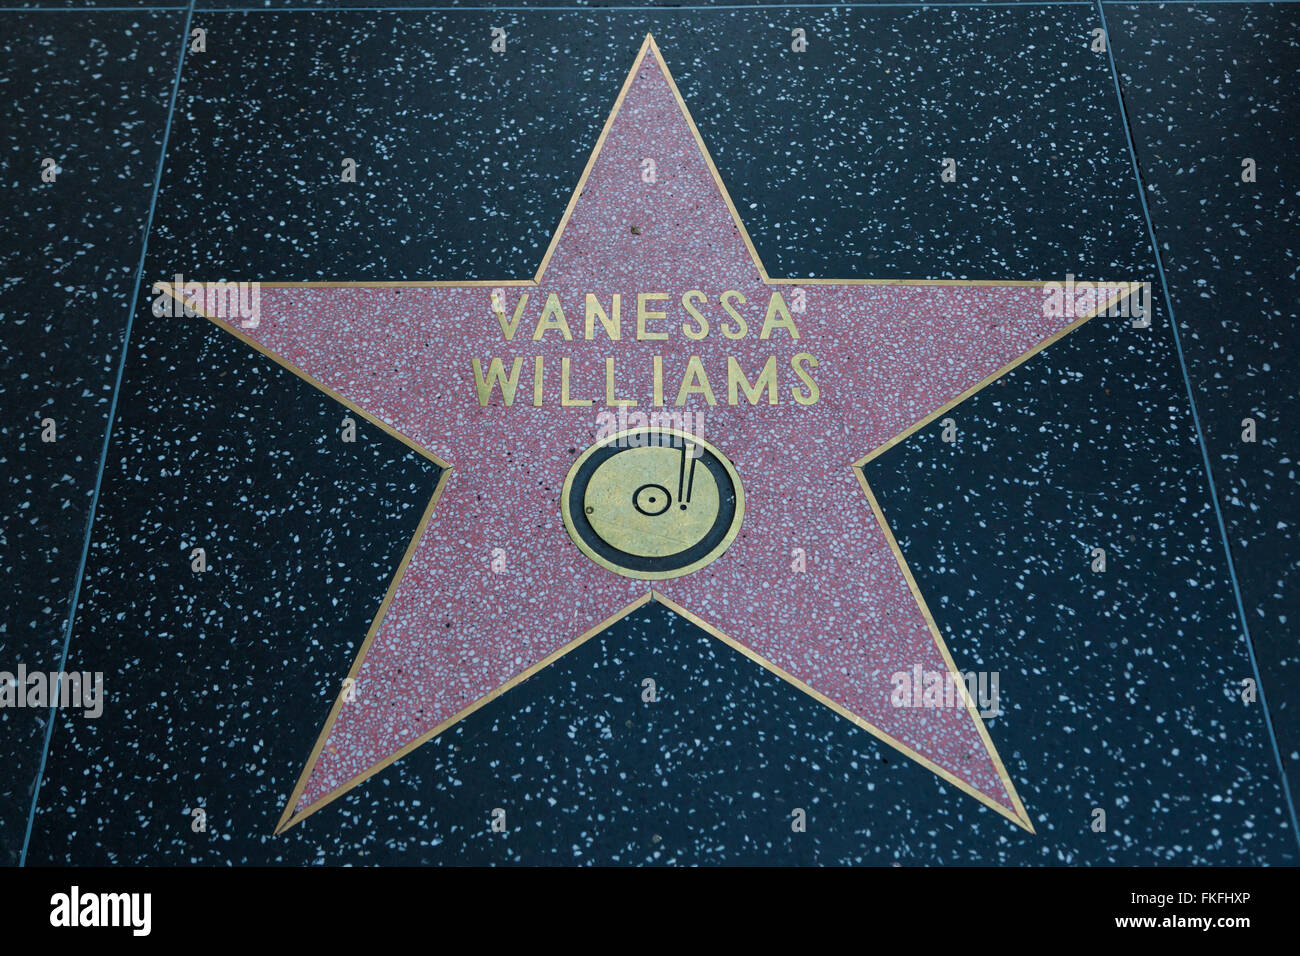 HOLLYWOOD, CALIFORNIE - Le 8 février 2015 : Vanessa Williams's Walk of Fame de Hollywood star le 8 février 2015 à Hollywood, CA. Banque D'Images